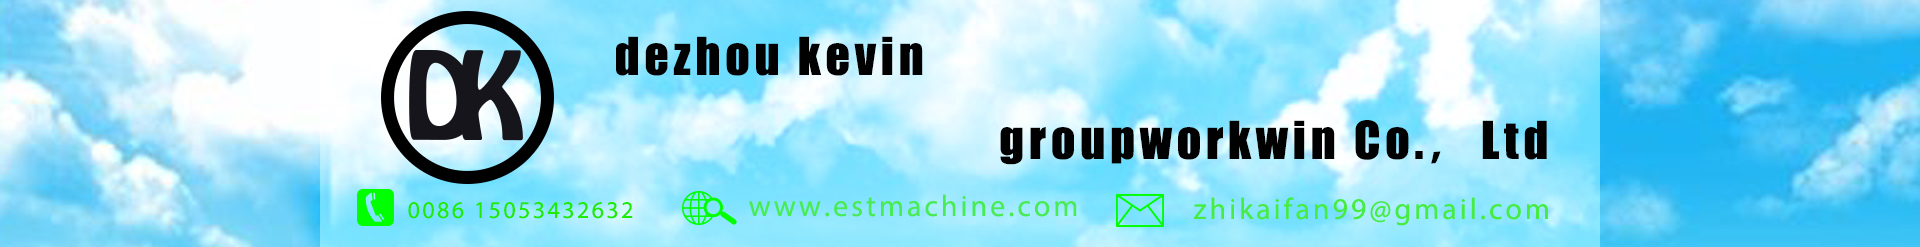 dezhou kevin groupworkwin Co.，Ltd